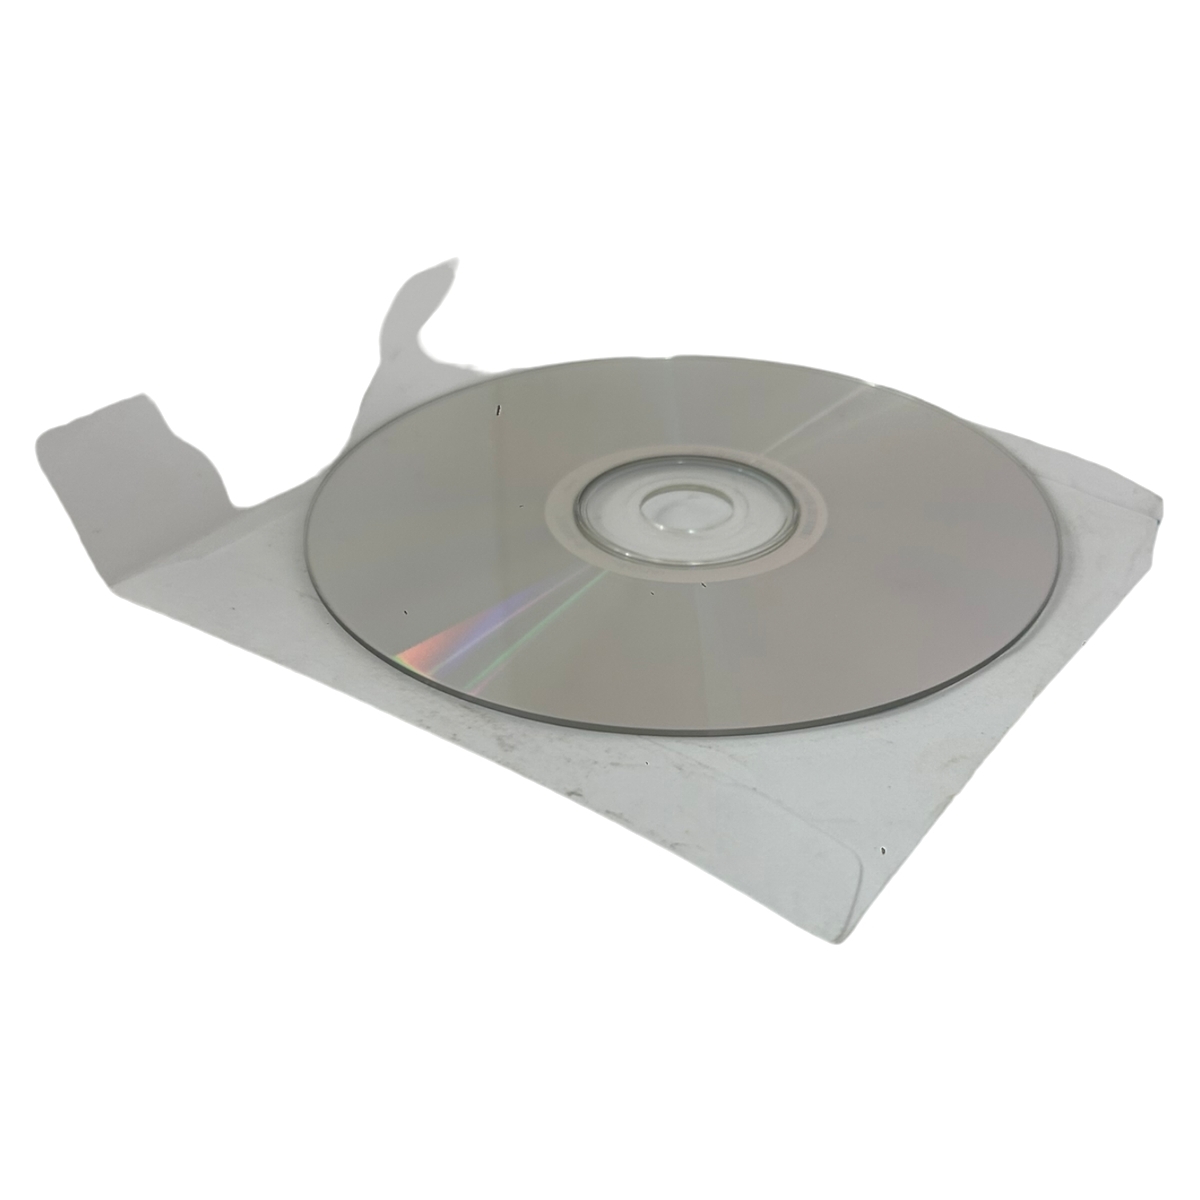 GT-S630 Epson scanner CD attaching 